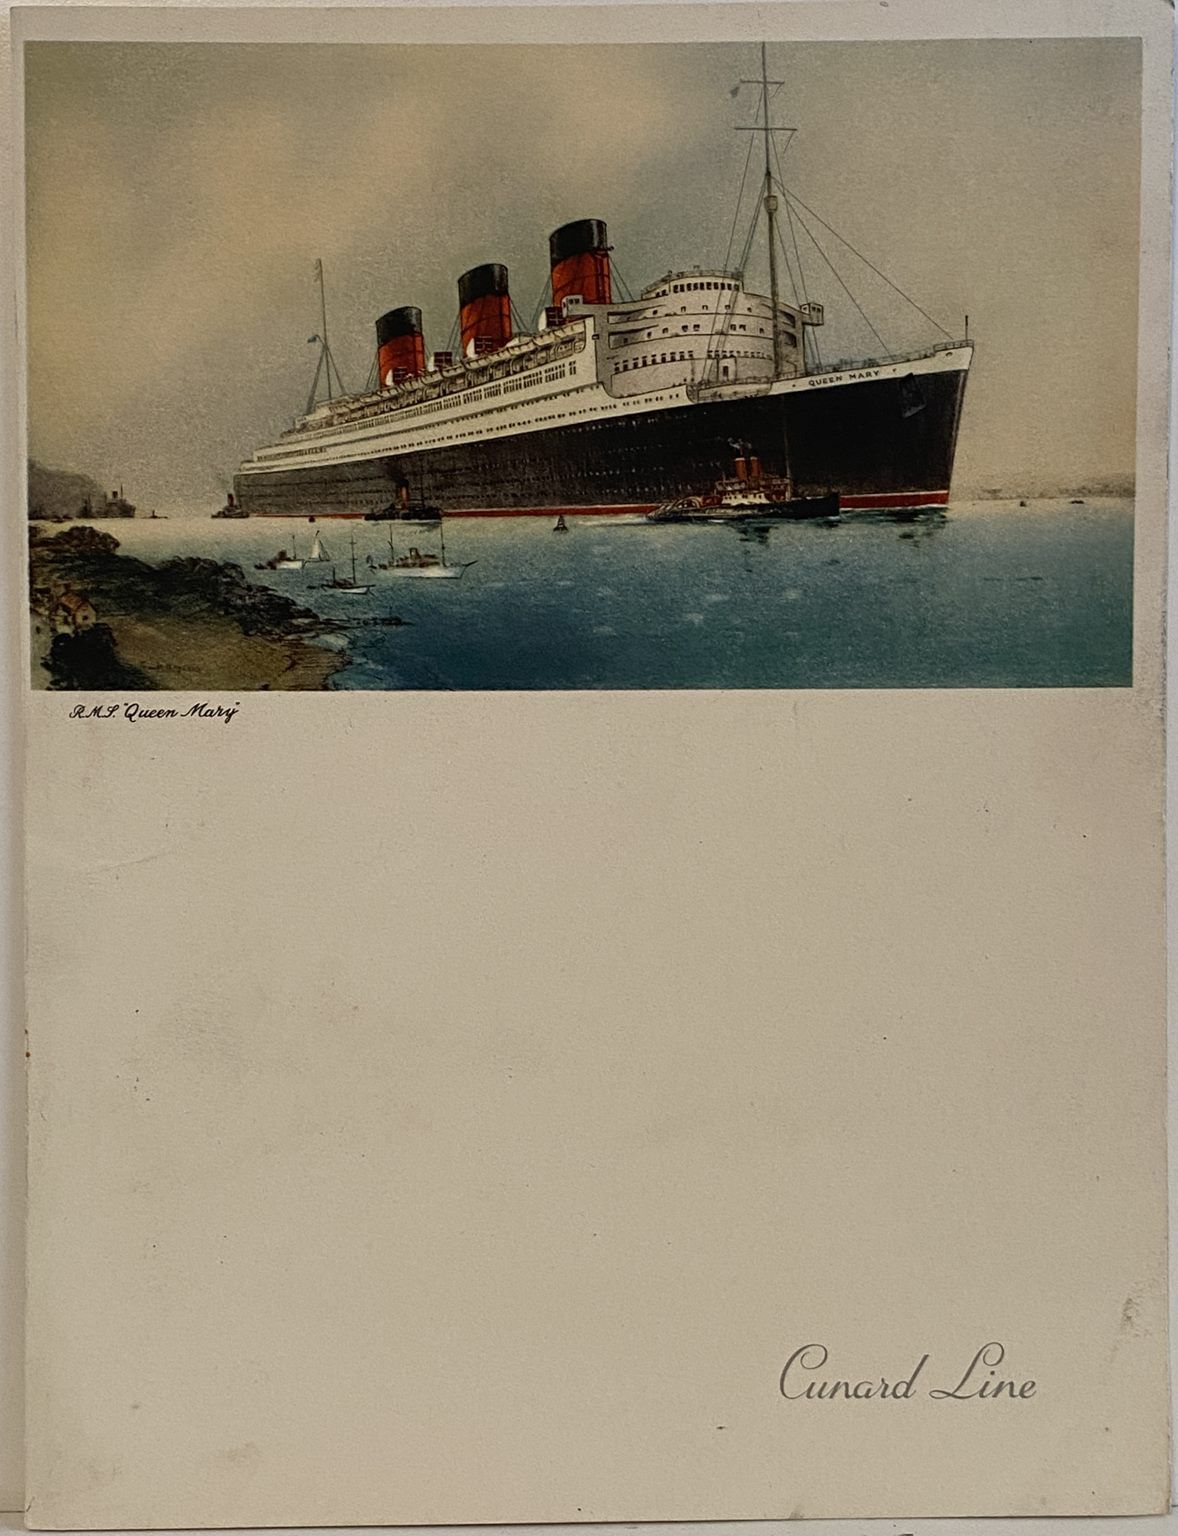 MARITIME MEMORABILIA: Cunard Line - RMS Queen Mary - Farewell Dinner 29 June 1952